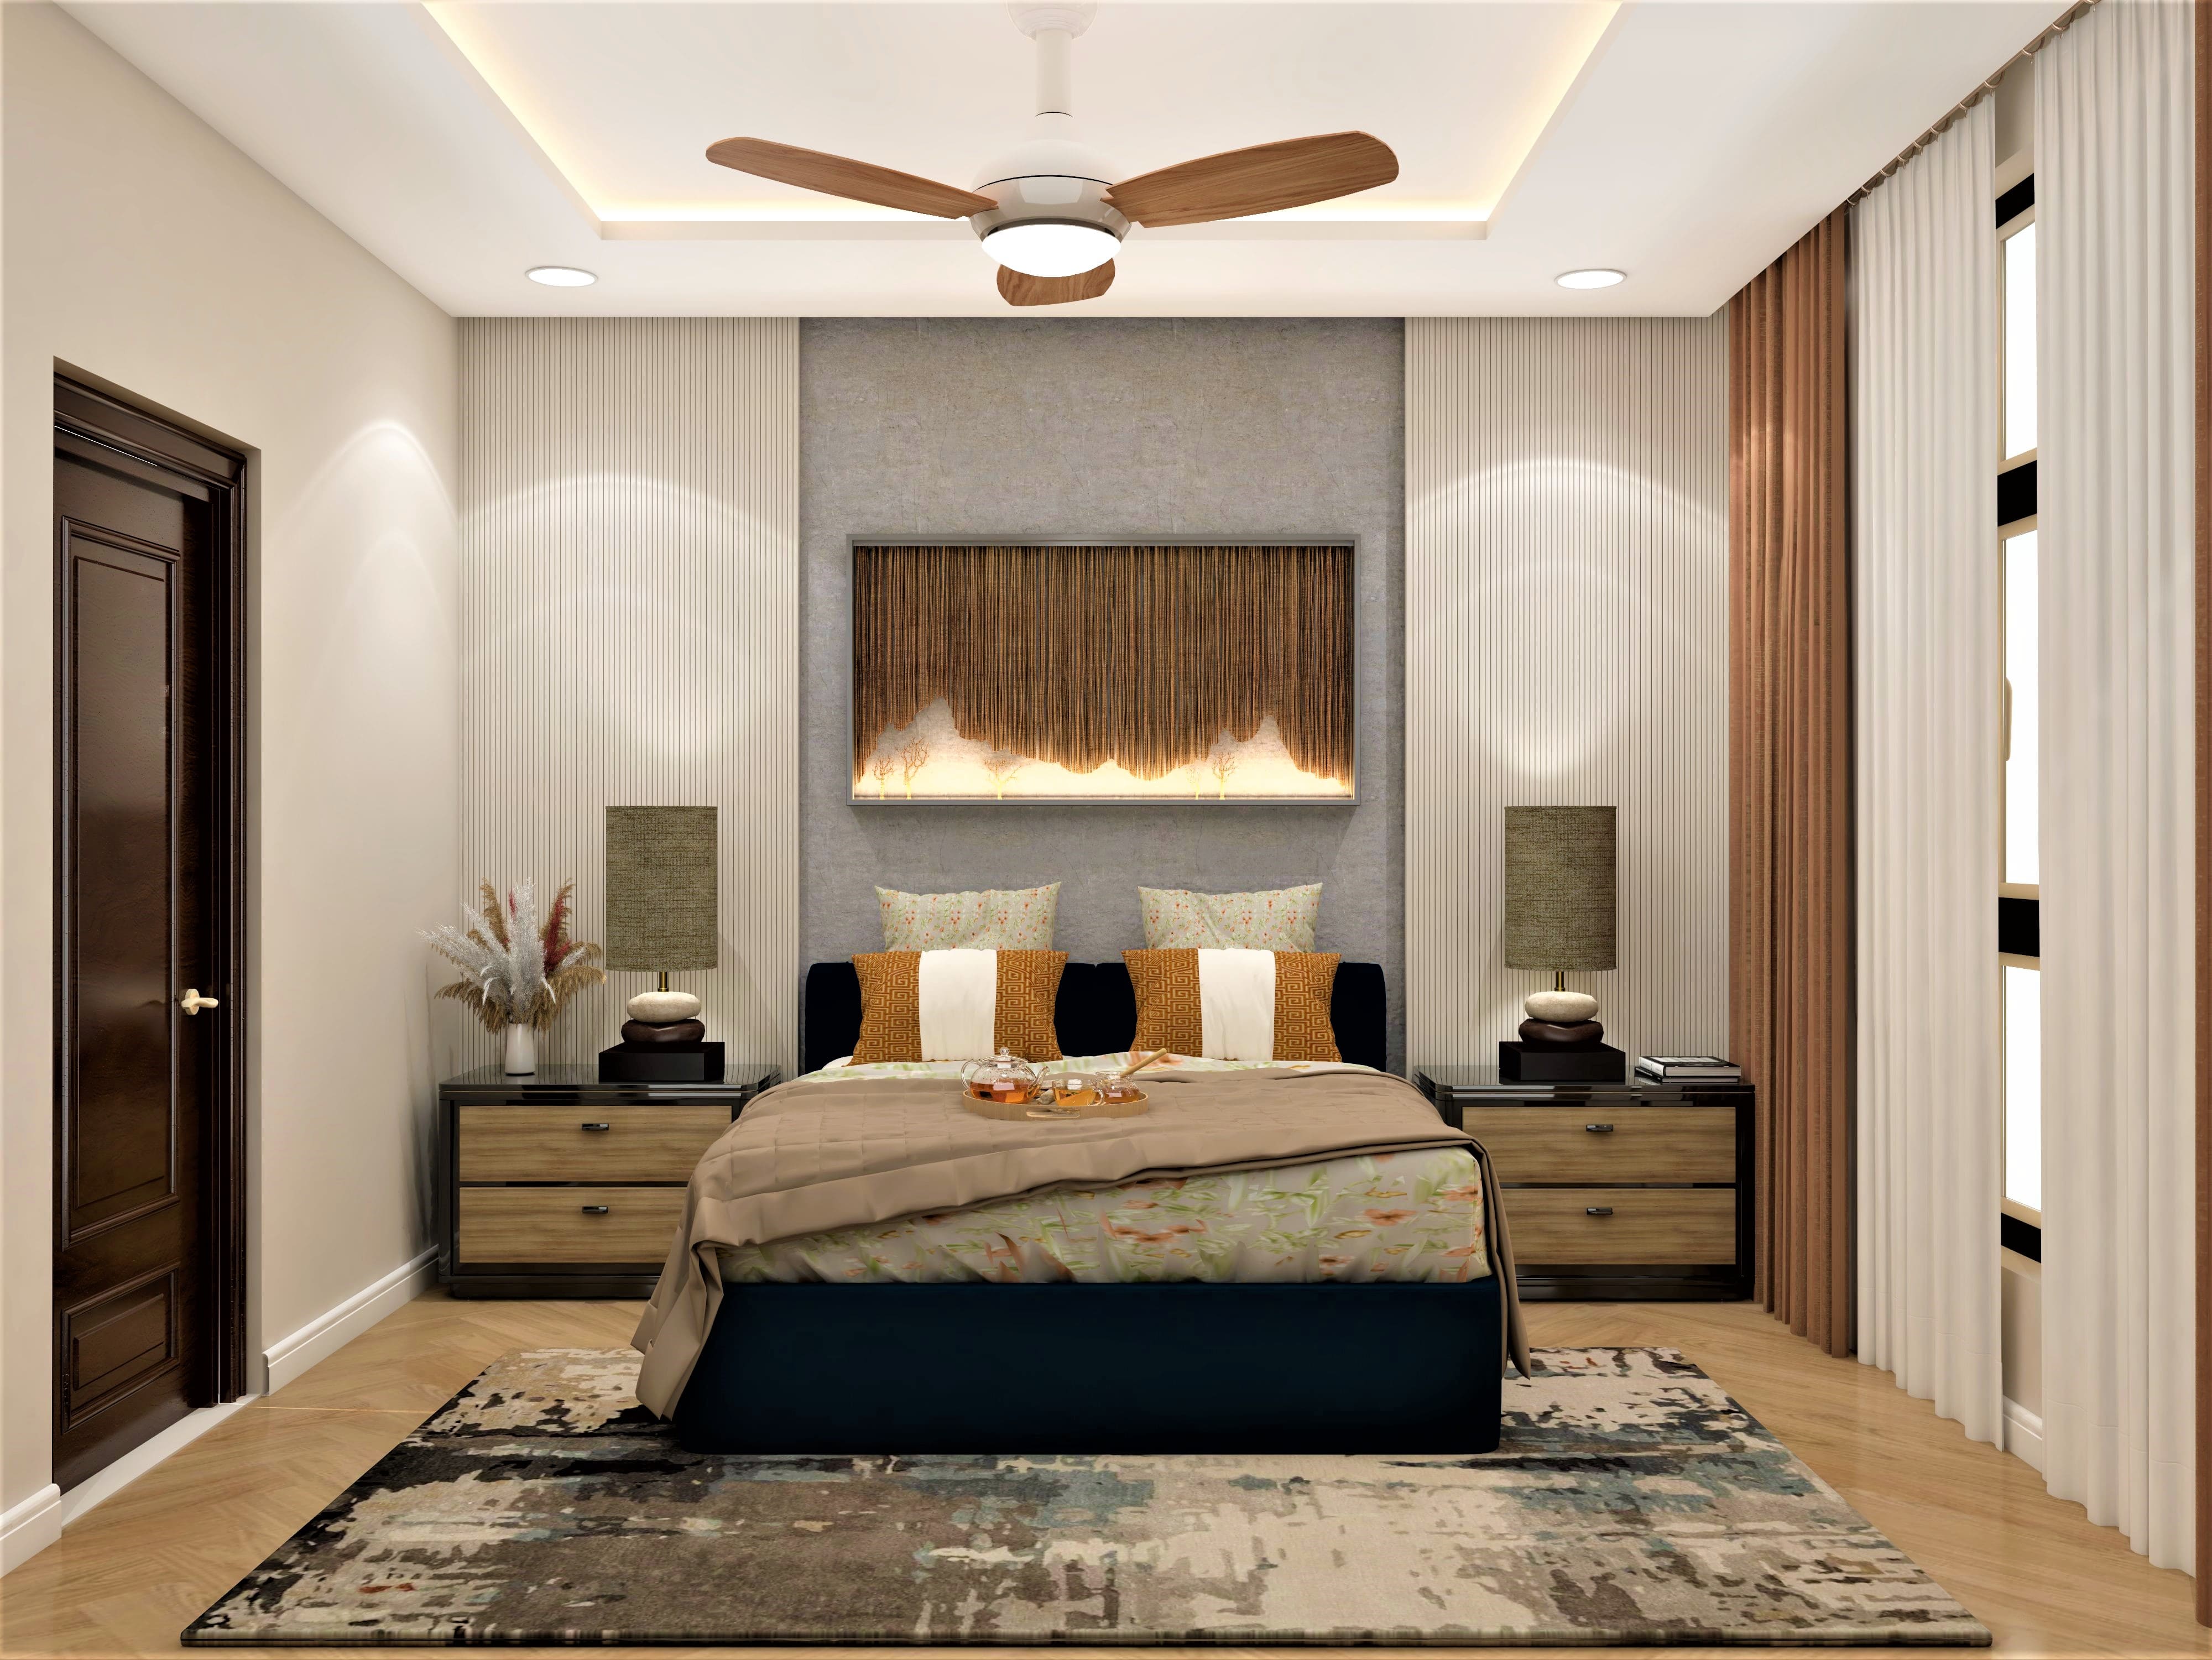 Elegant and timeless master bedroom design - Beautiful Homes